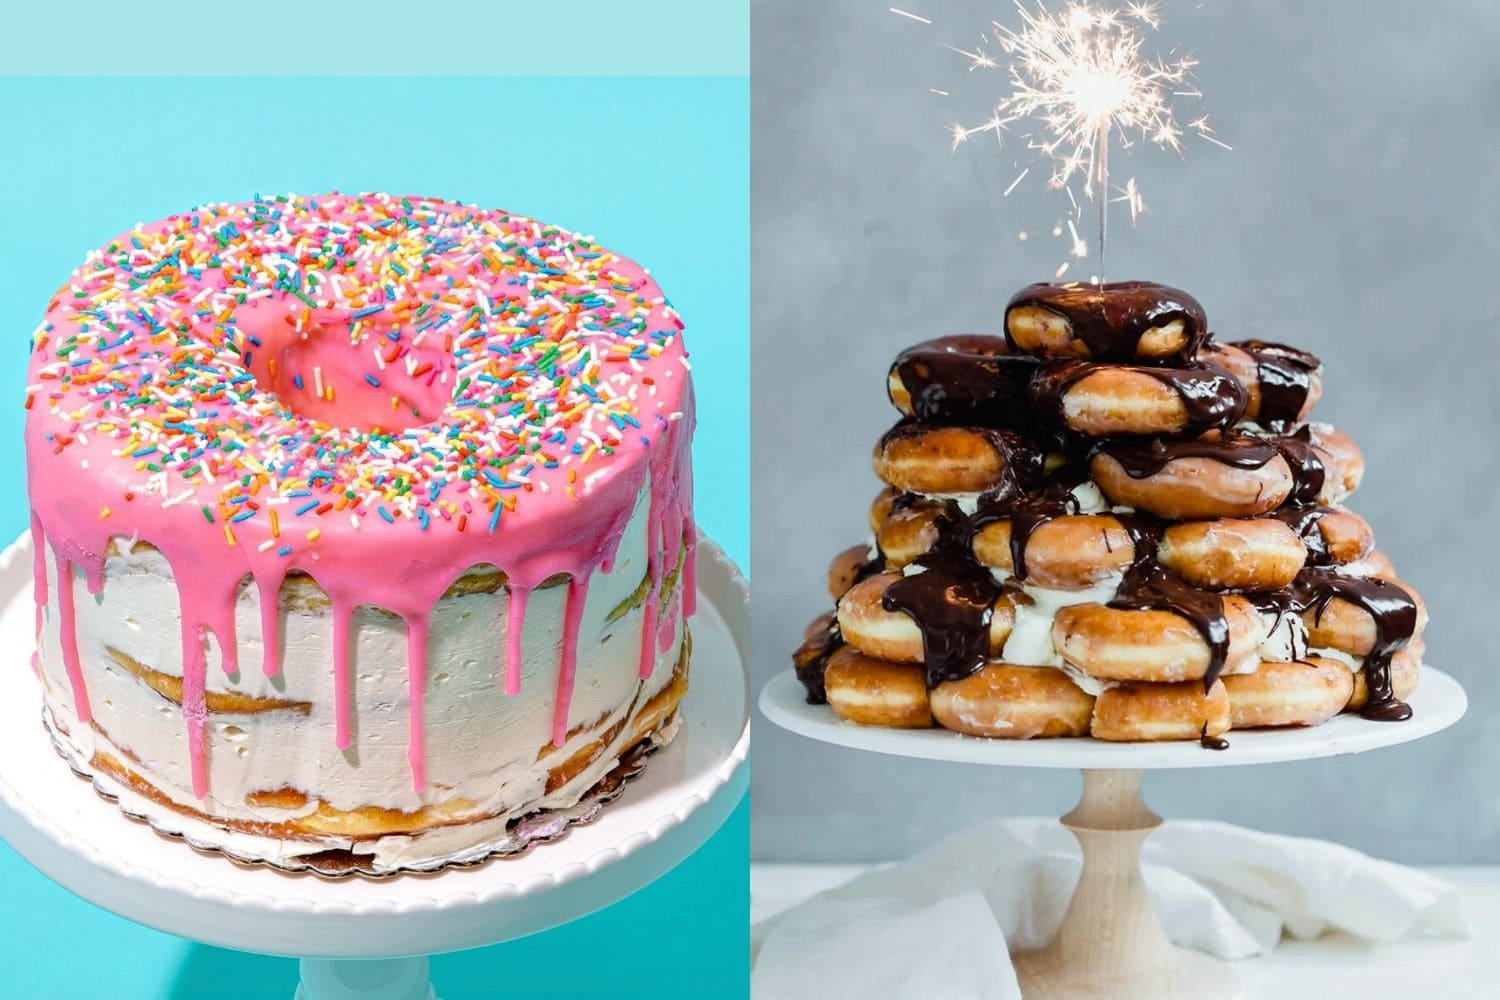 How to make a Giant Donut (Doughnut) Cake Decorating Tutorial - YouTube